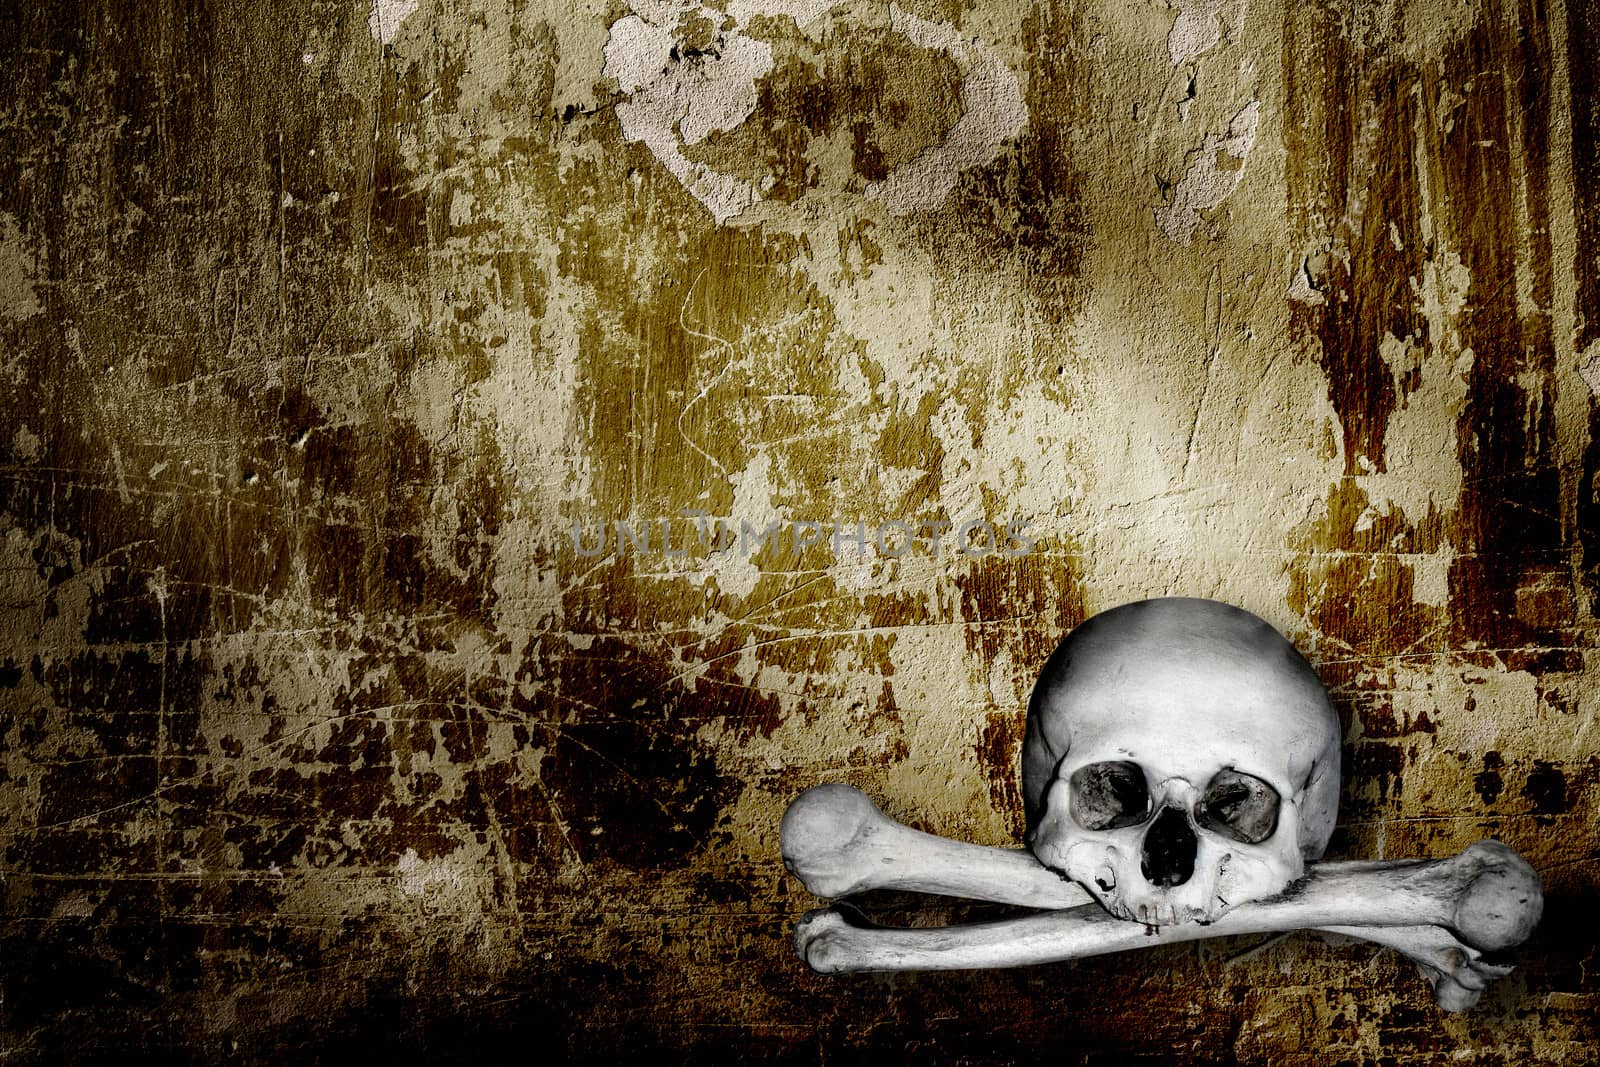 Human skulls and bones by frenta